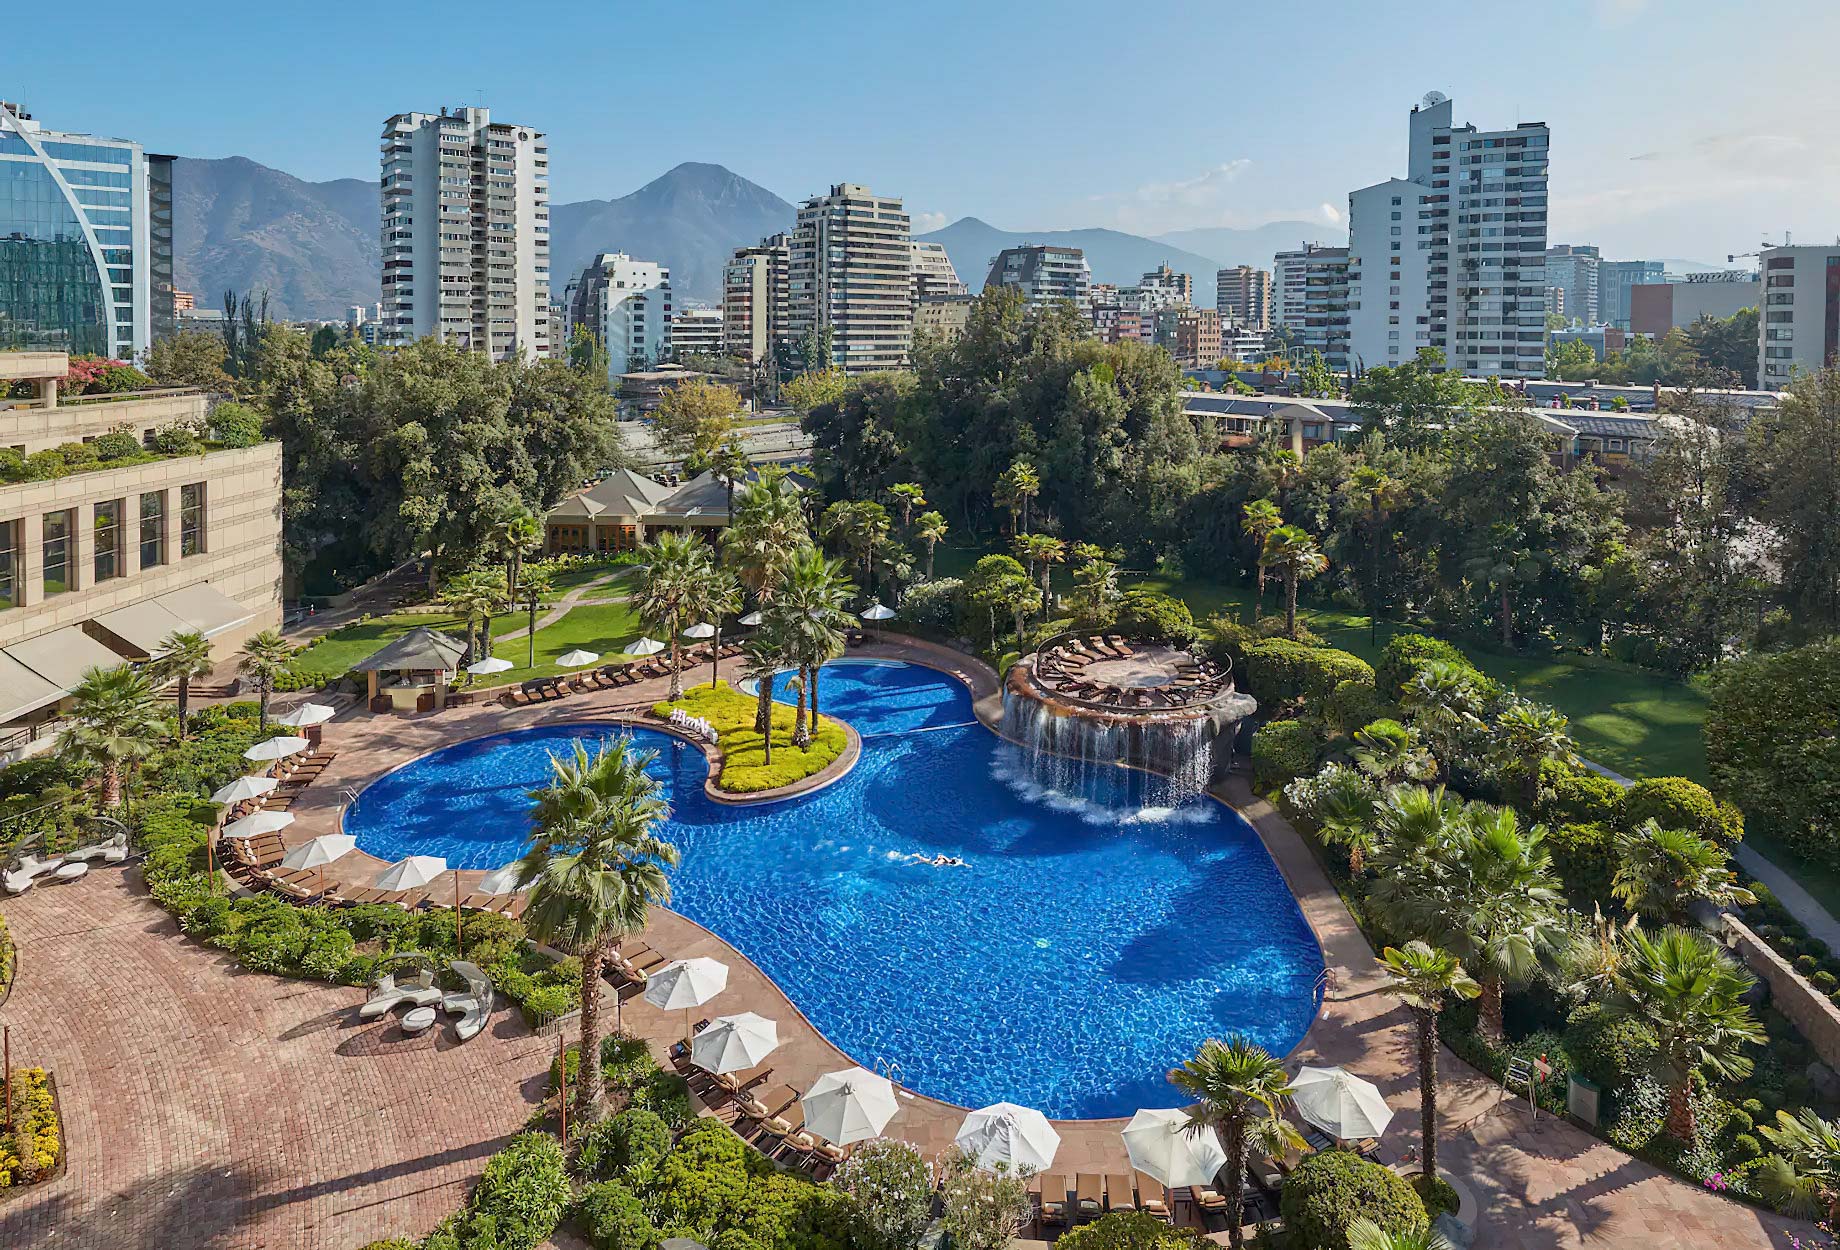 Mandarin Oriental, Santiago Hotel - Santiago, Chile - Exterior Pool Aerial View